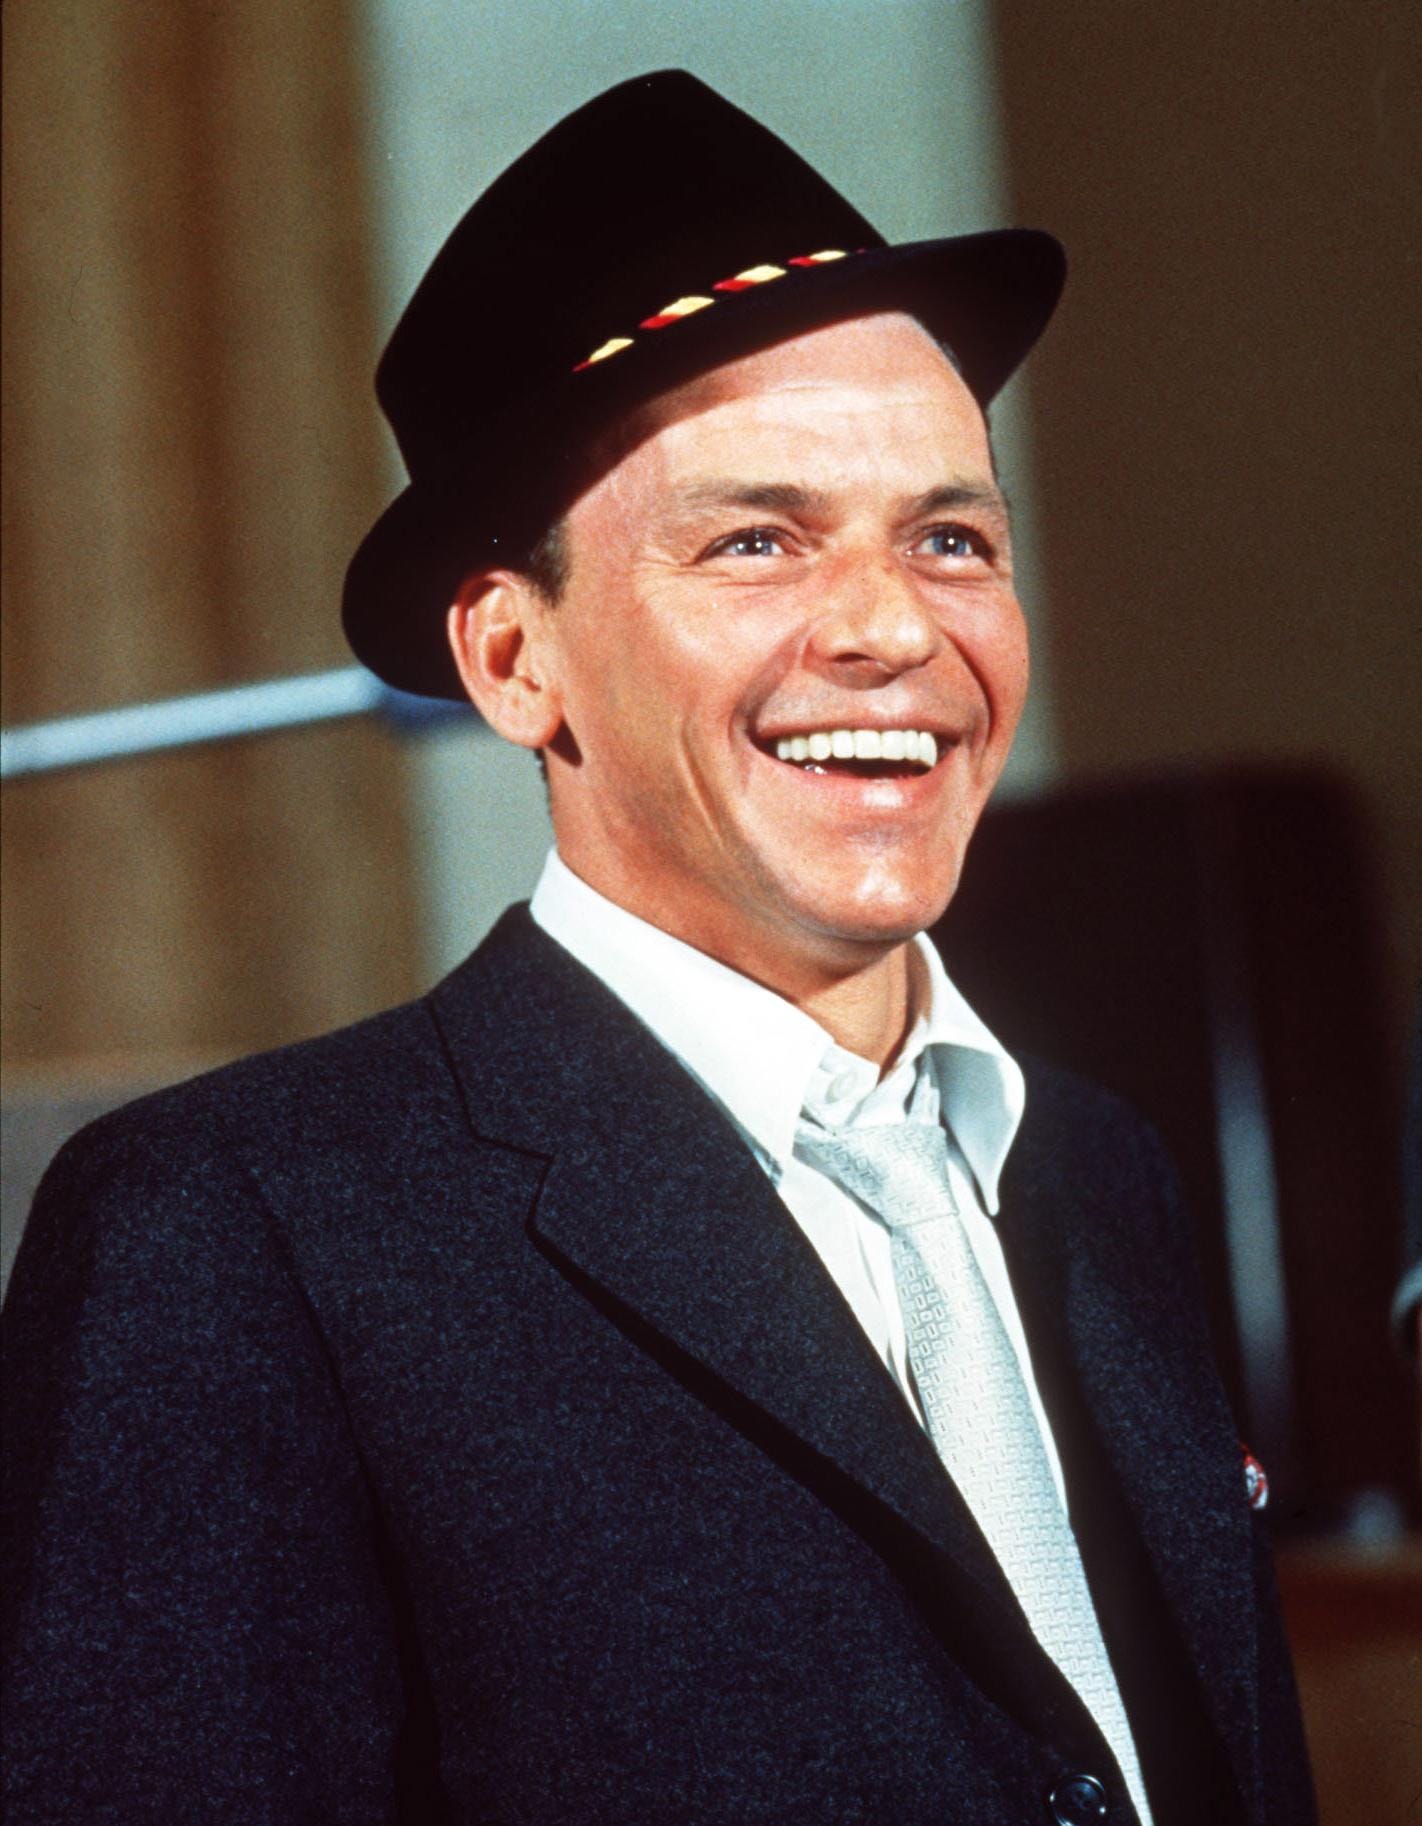 Frank Sinatra: Original Jersey boy